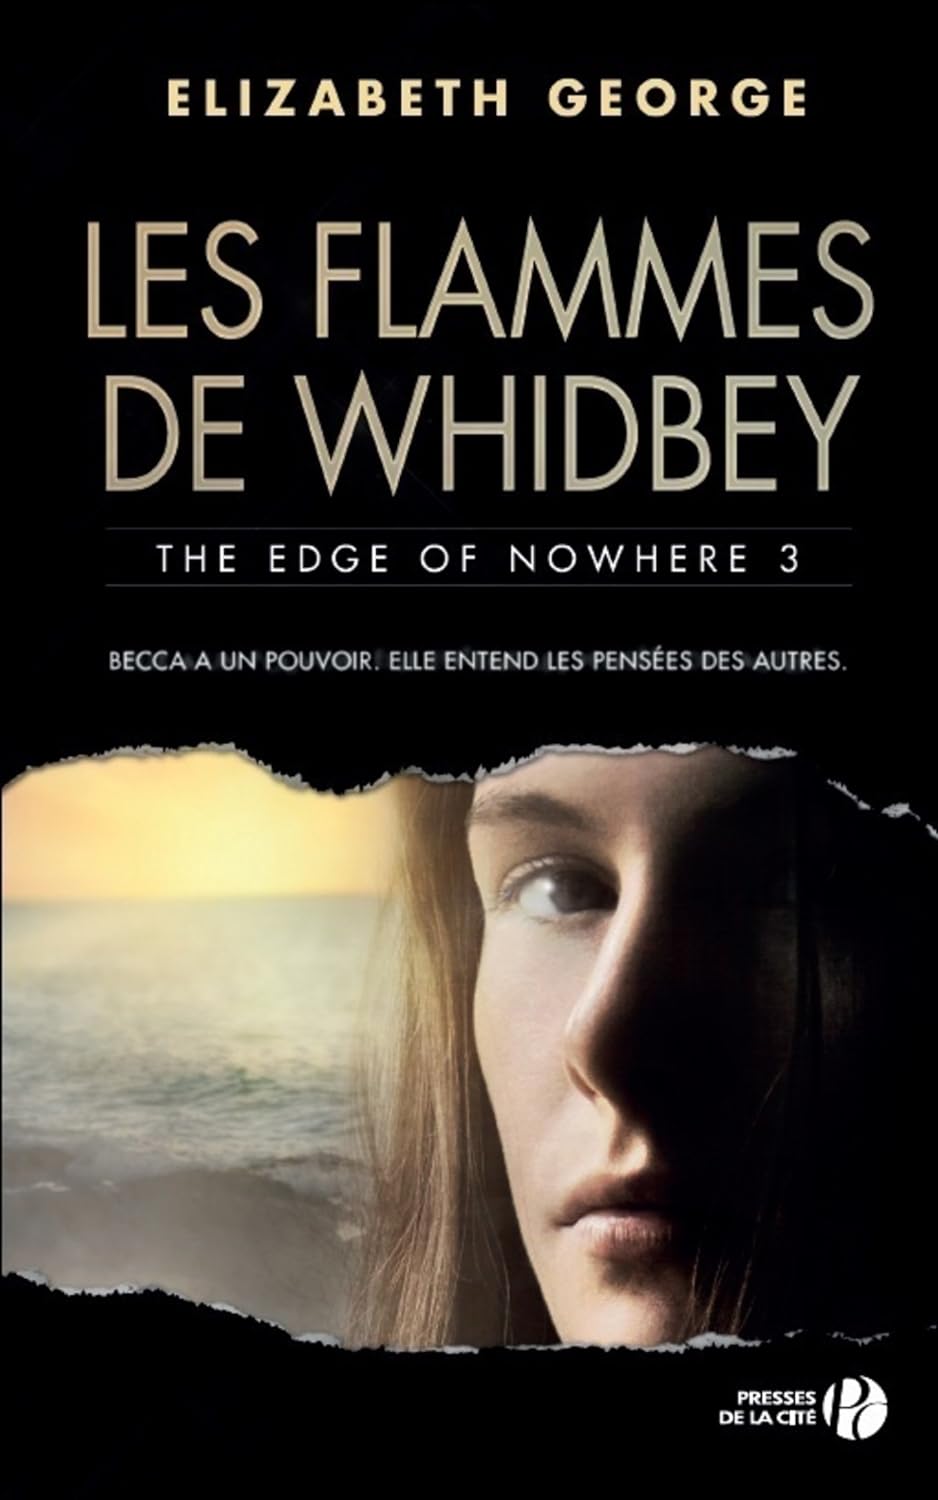 The Edge of Nowhere # 3 : Les flammes de Whidbey - Elizabeth George